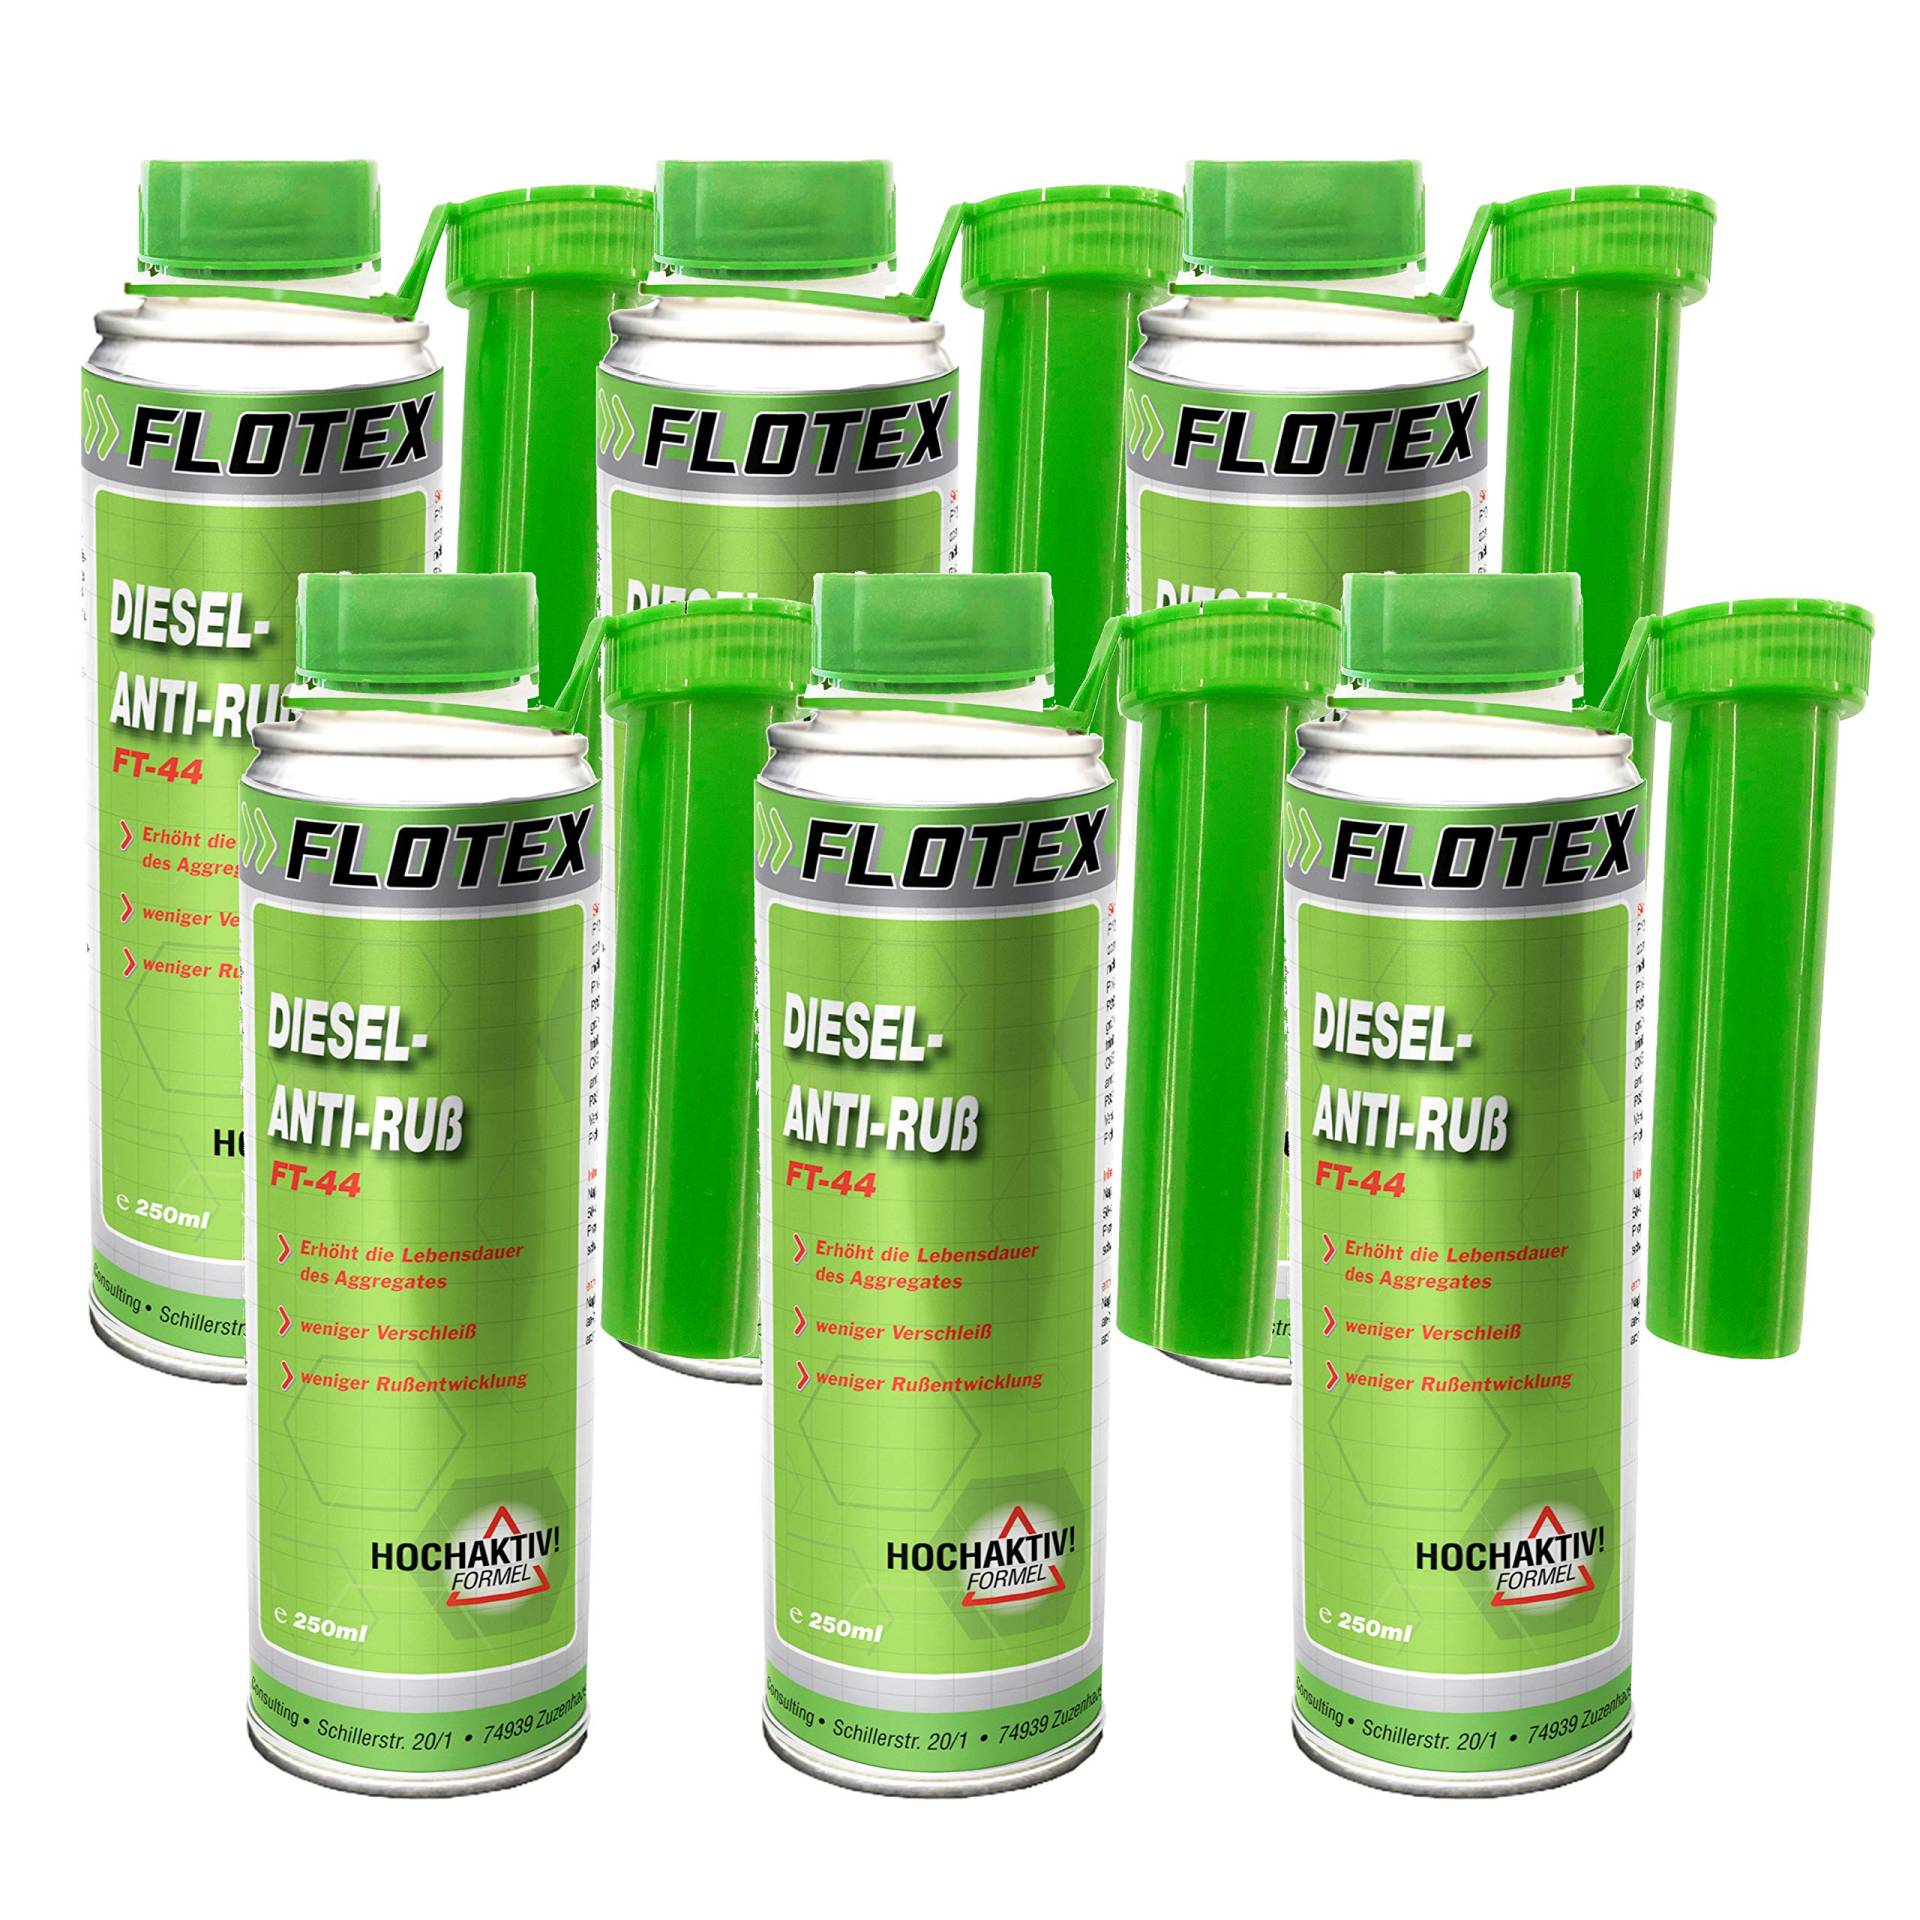 Flotex Diesel Anti Ruß, 6 x 250ml Additiv verringert Rußbildung von Flotex